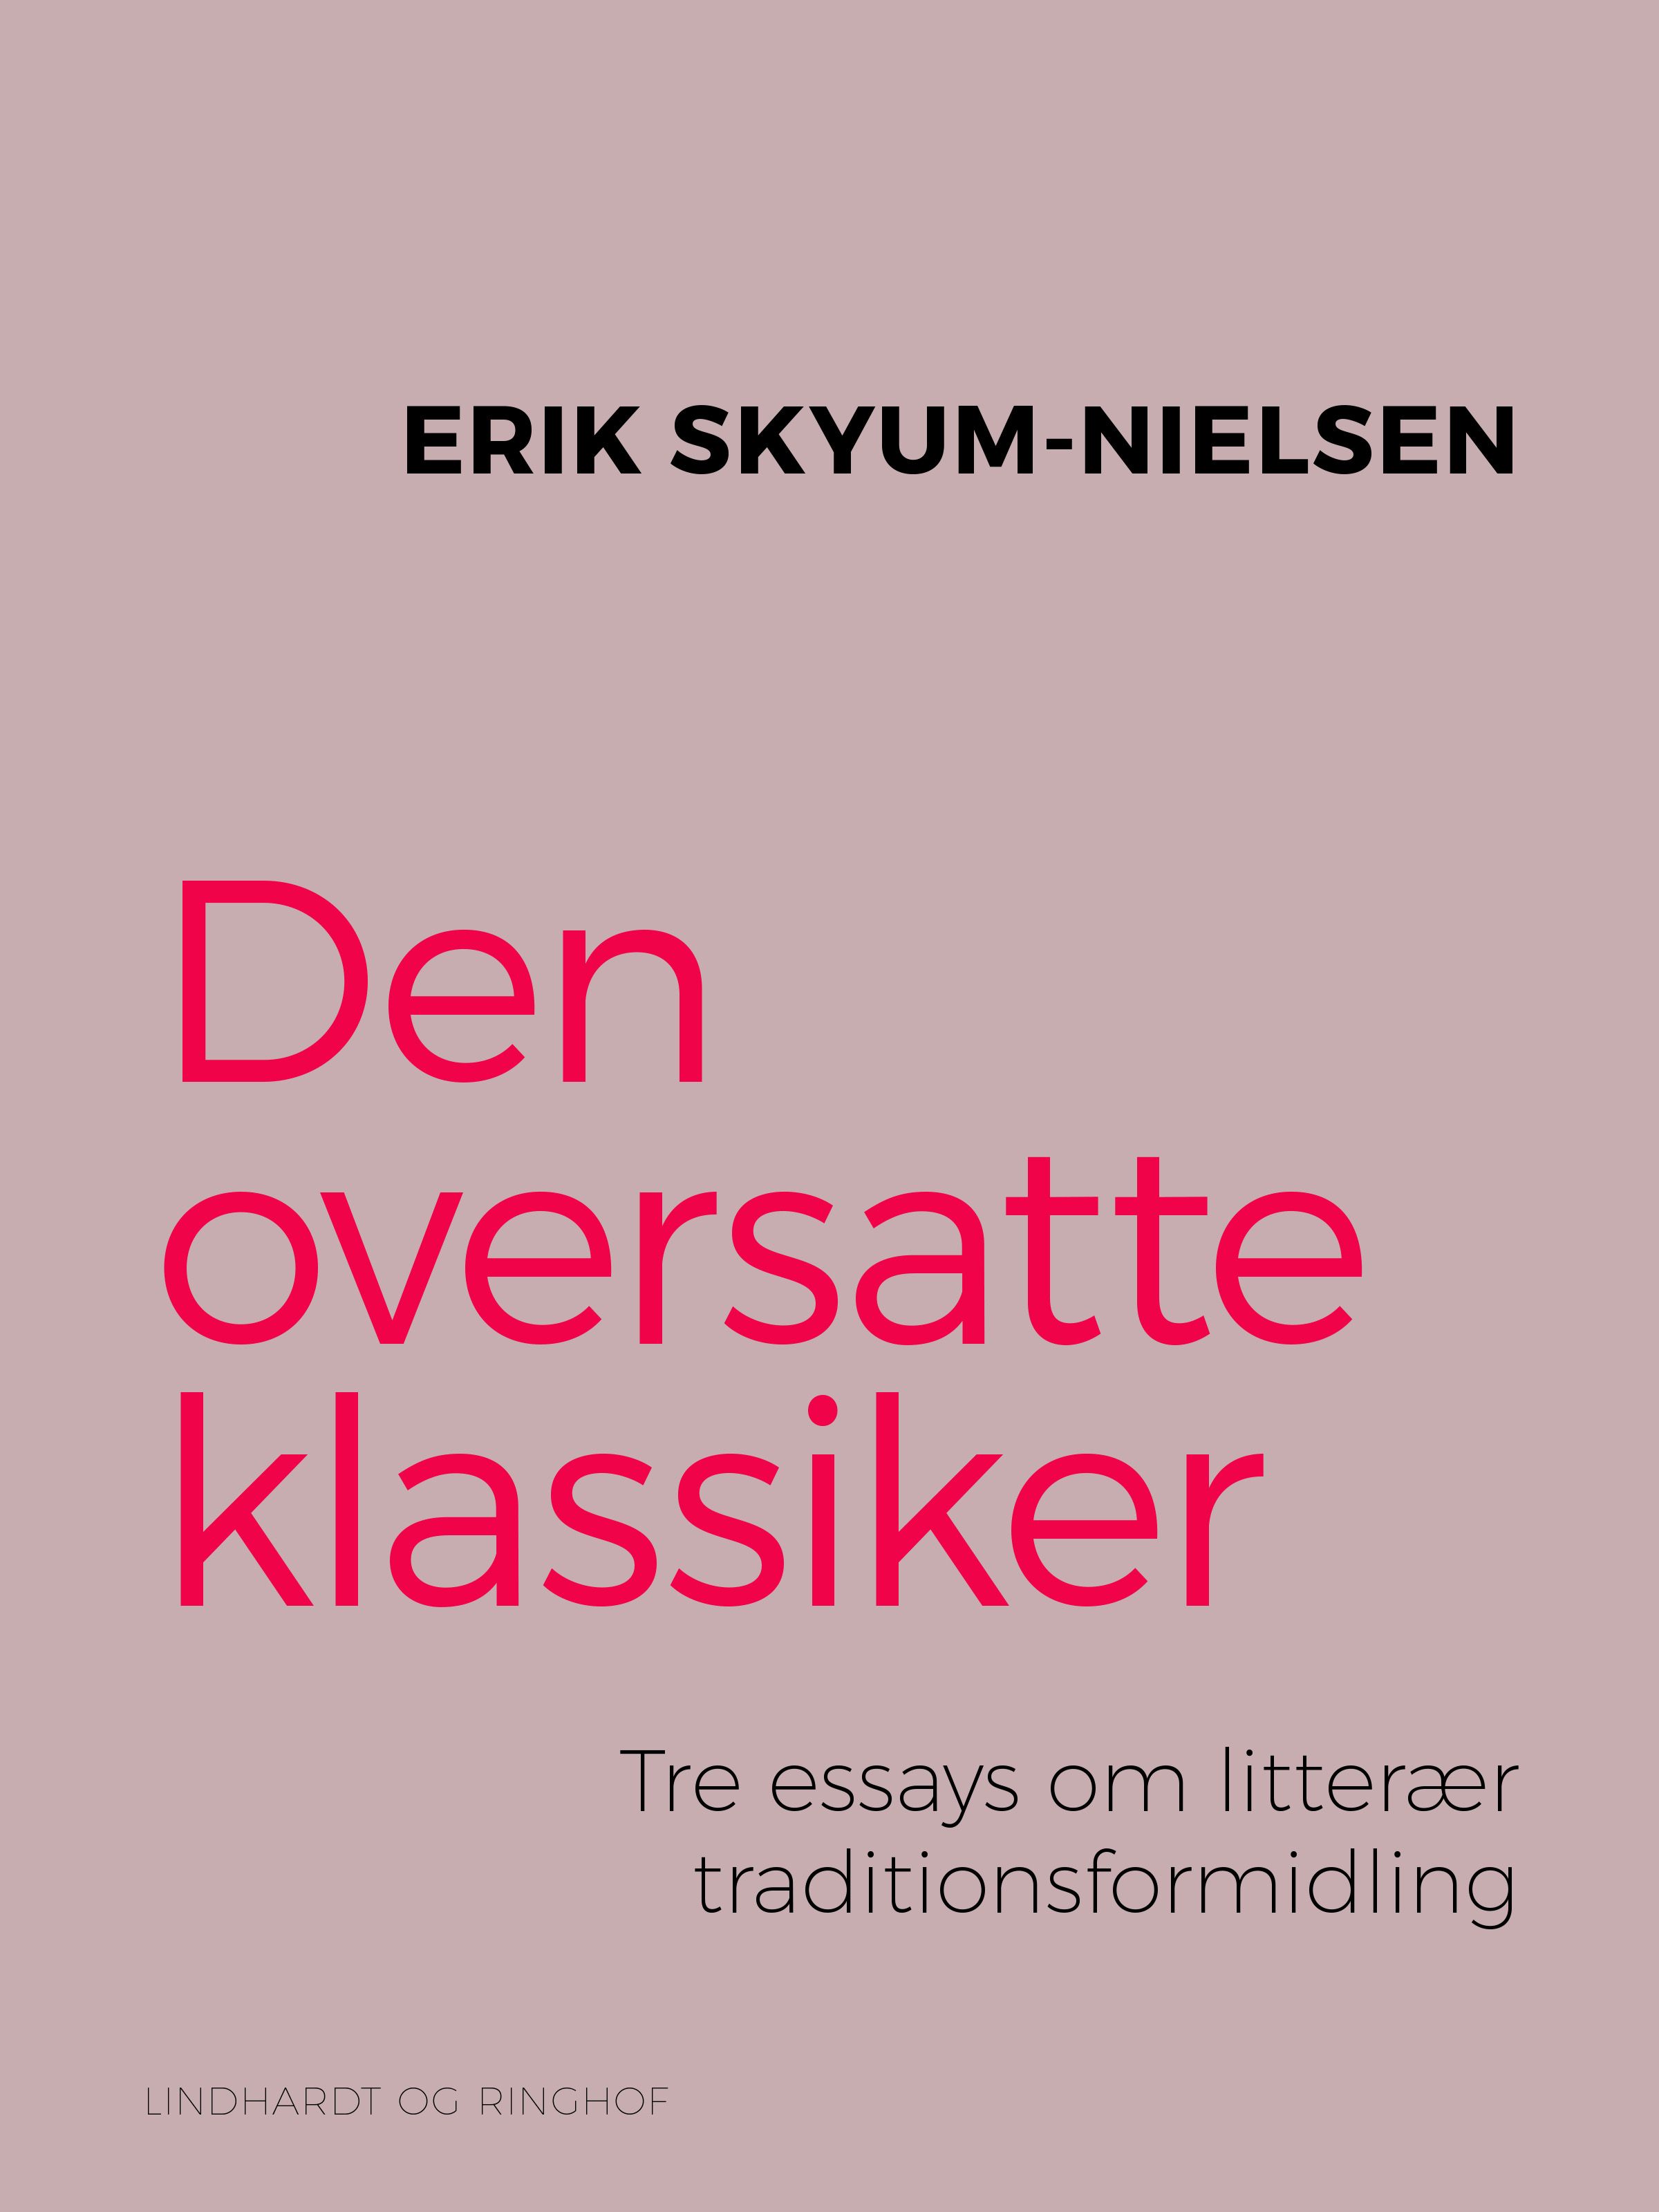 Den oversatte klassiker. Tre essays om litterær traditionsformidling, eBook by Erik Skyum-Nielsen